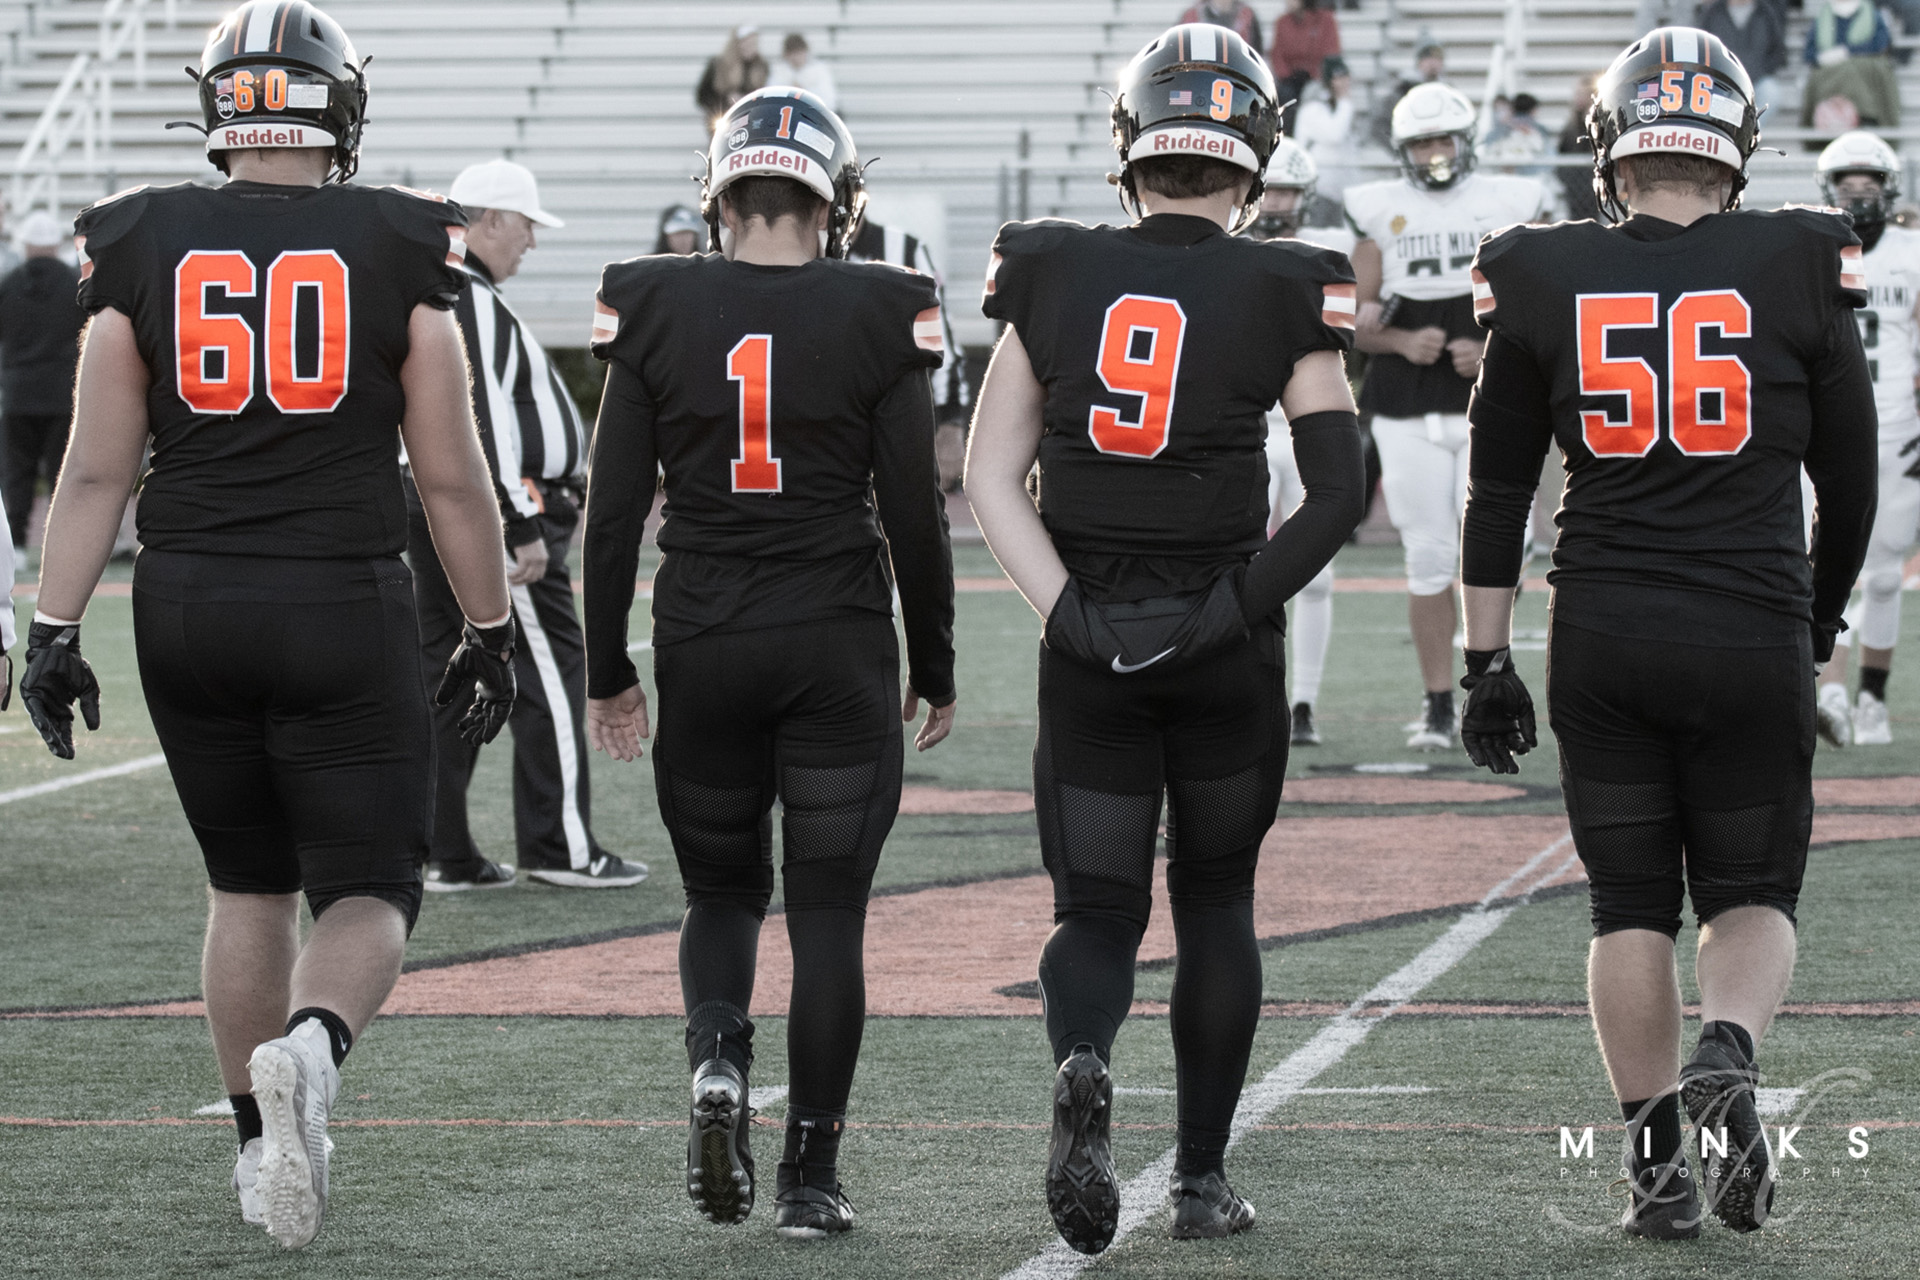 Loveland Ohio high school football captains walking on field for coin toss